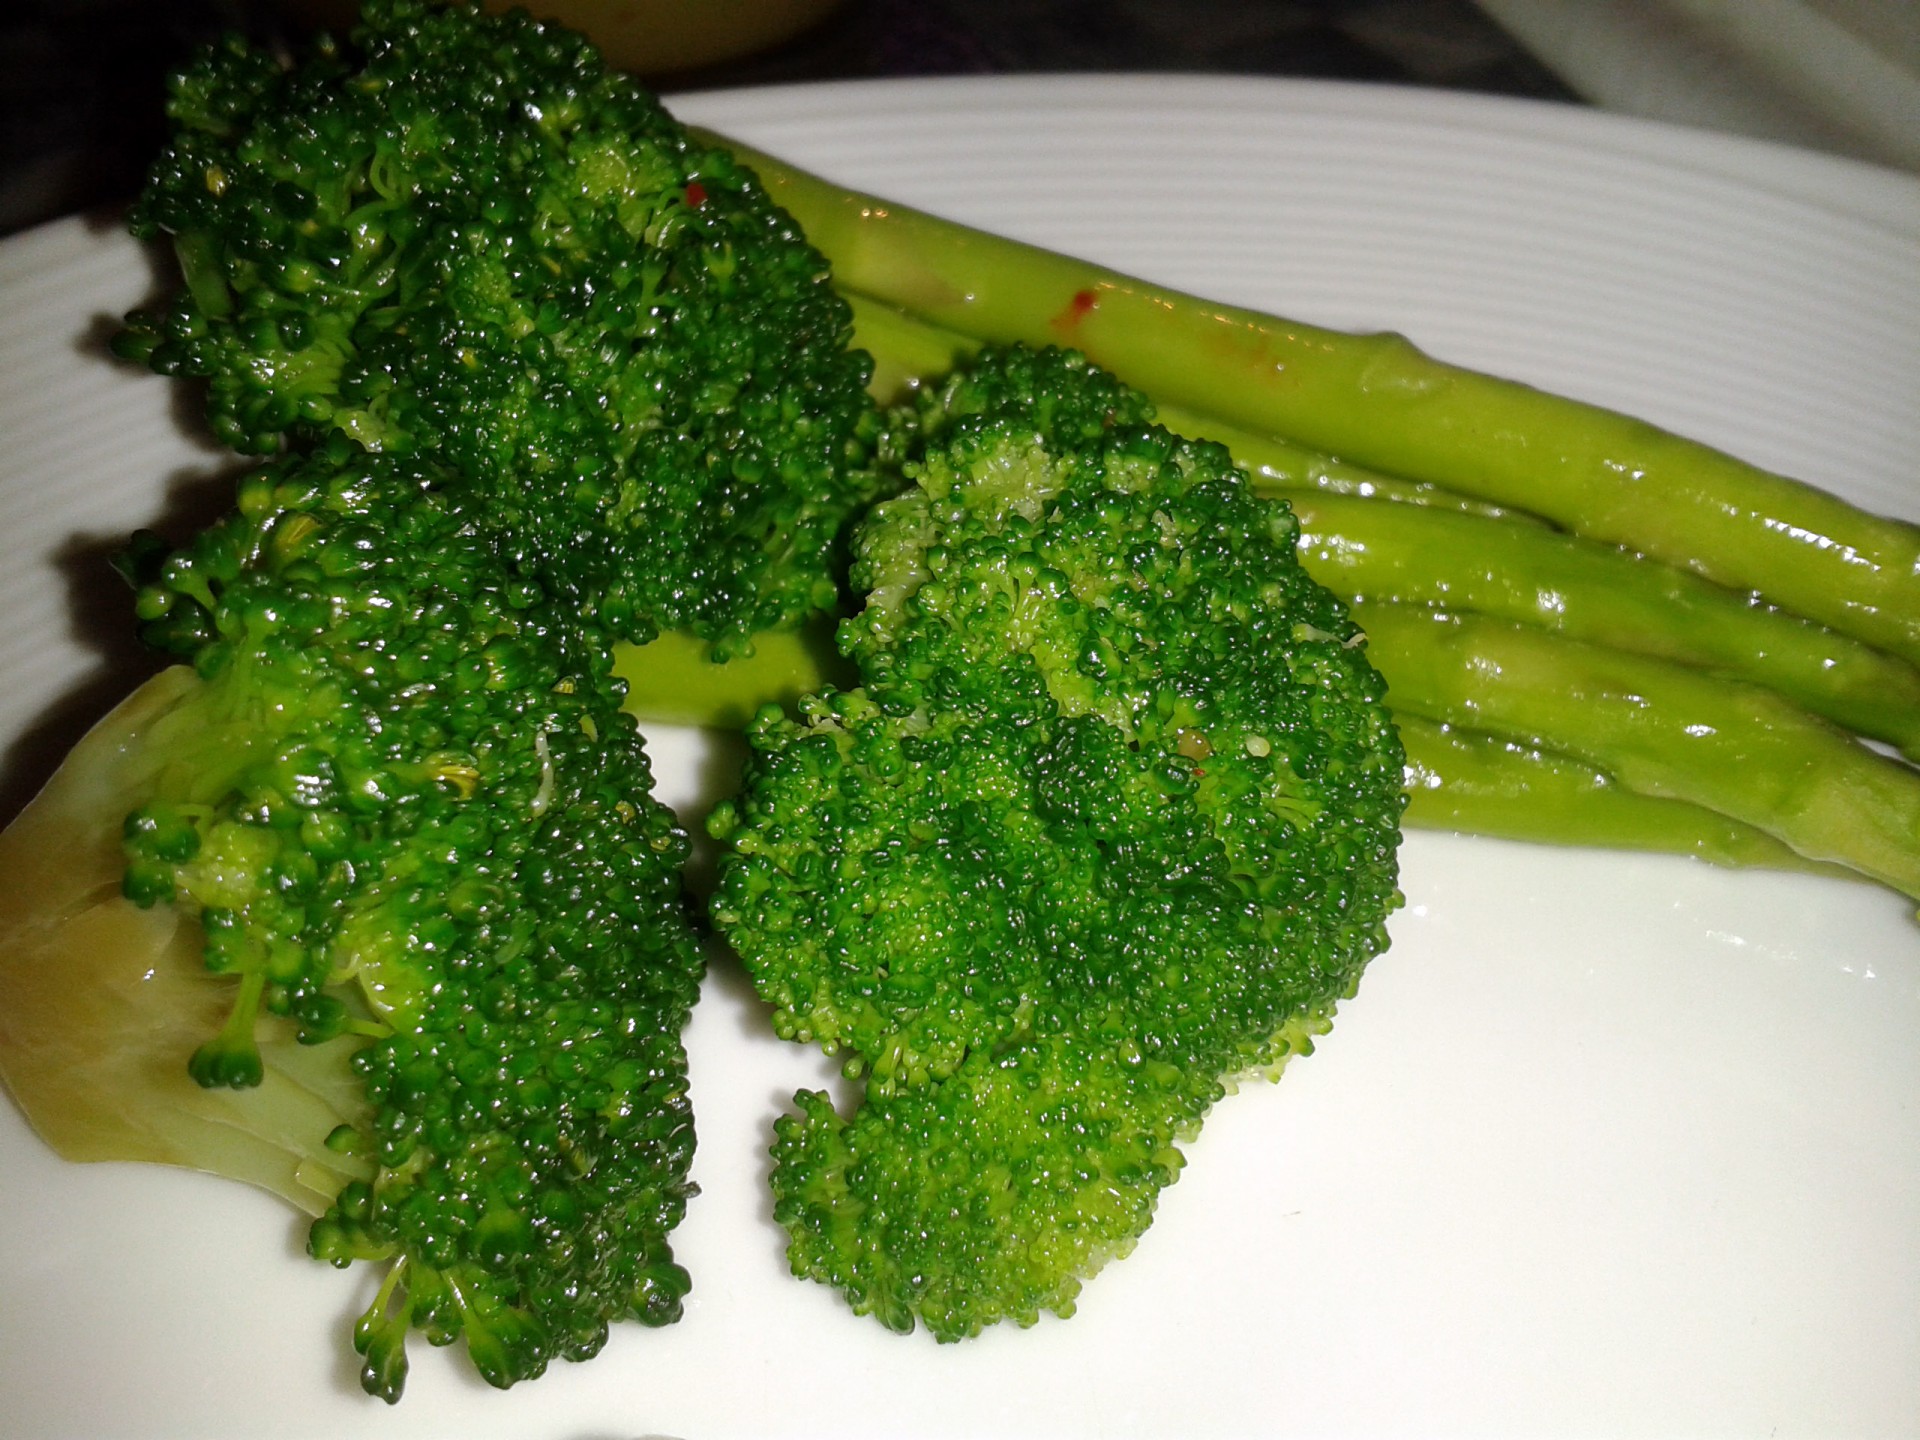 Spicy Broccoli